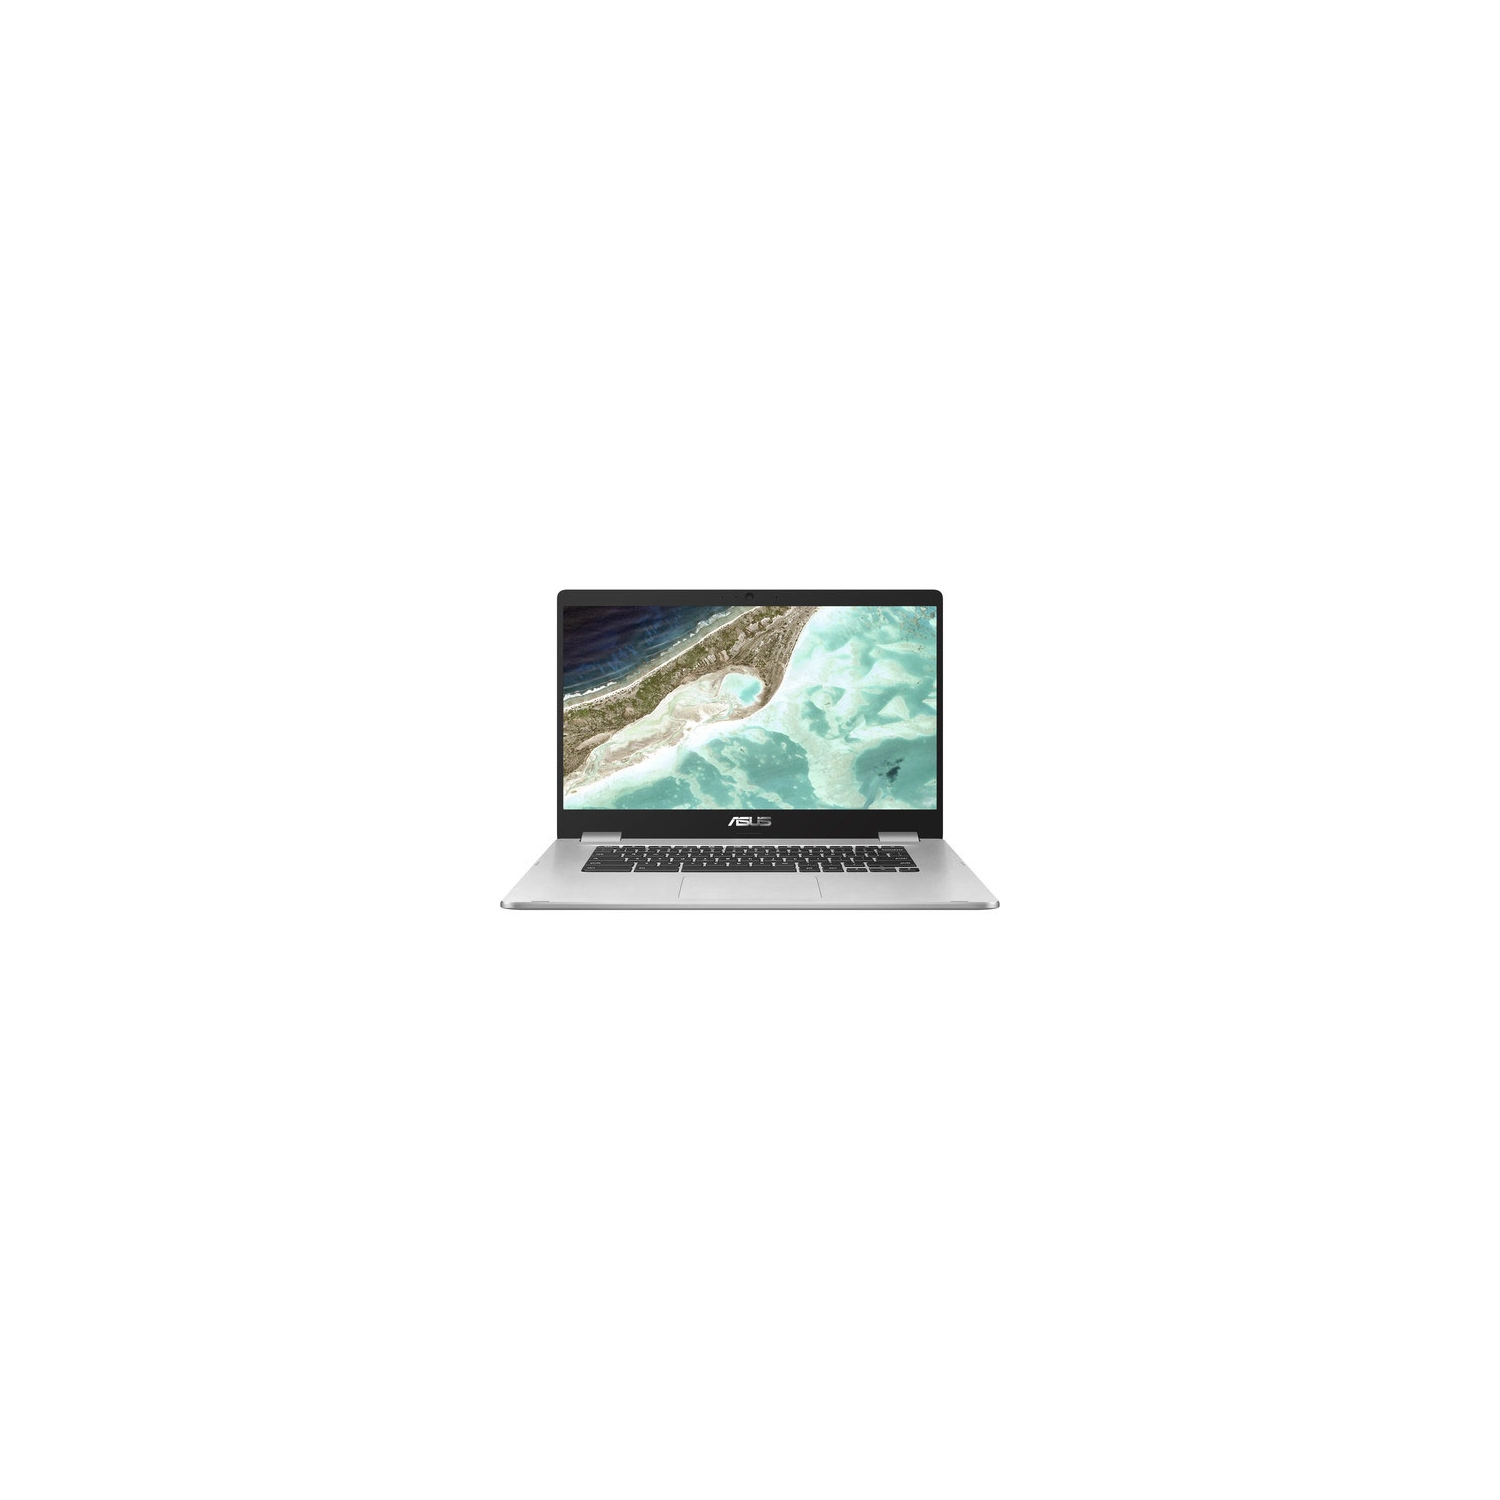 Open Box - ASUS 15.6" 2-in-1 Laptop - Silver (Intel Celeron N3350/32 GB SSD/4 GB RAM/Chrome OS)